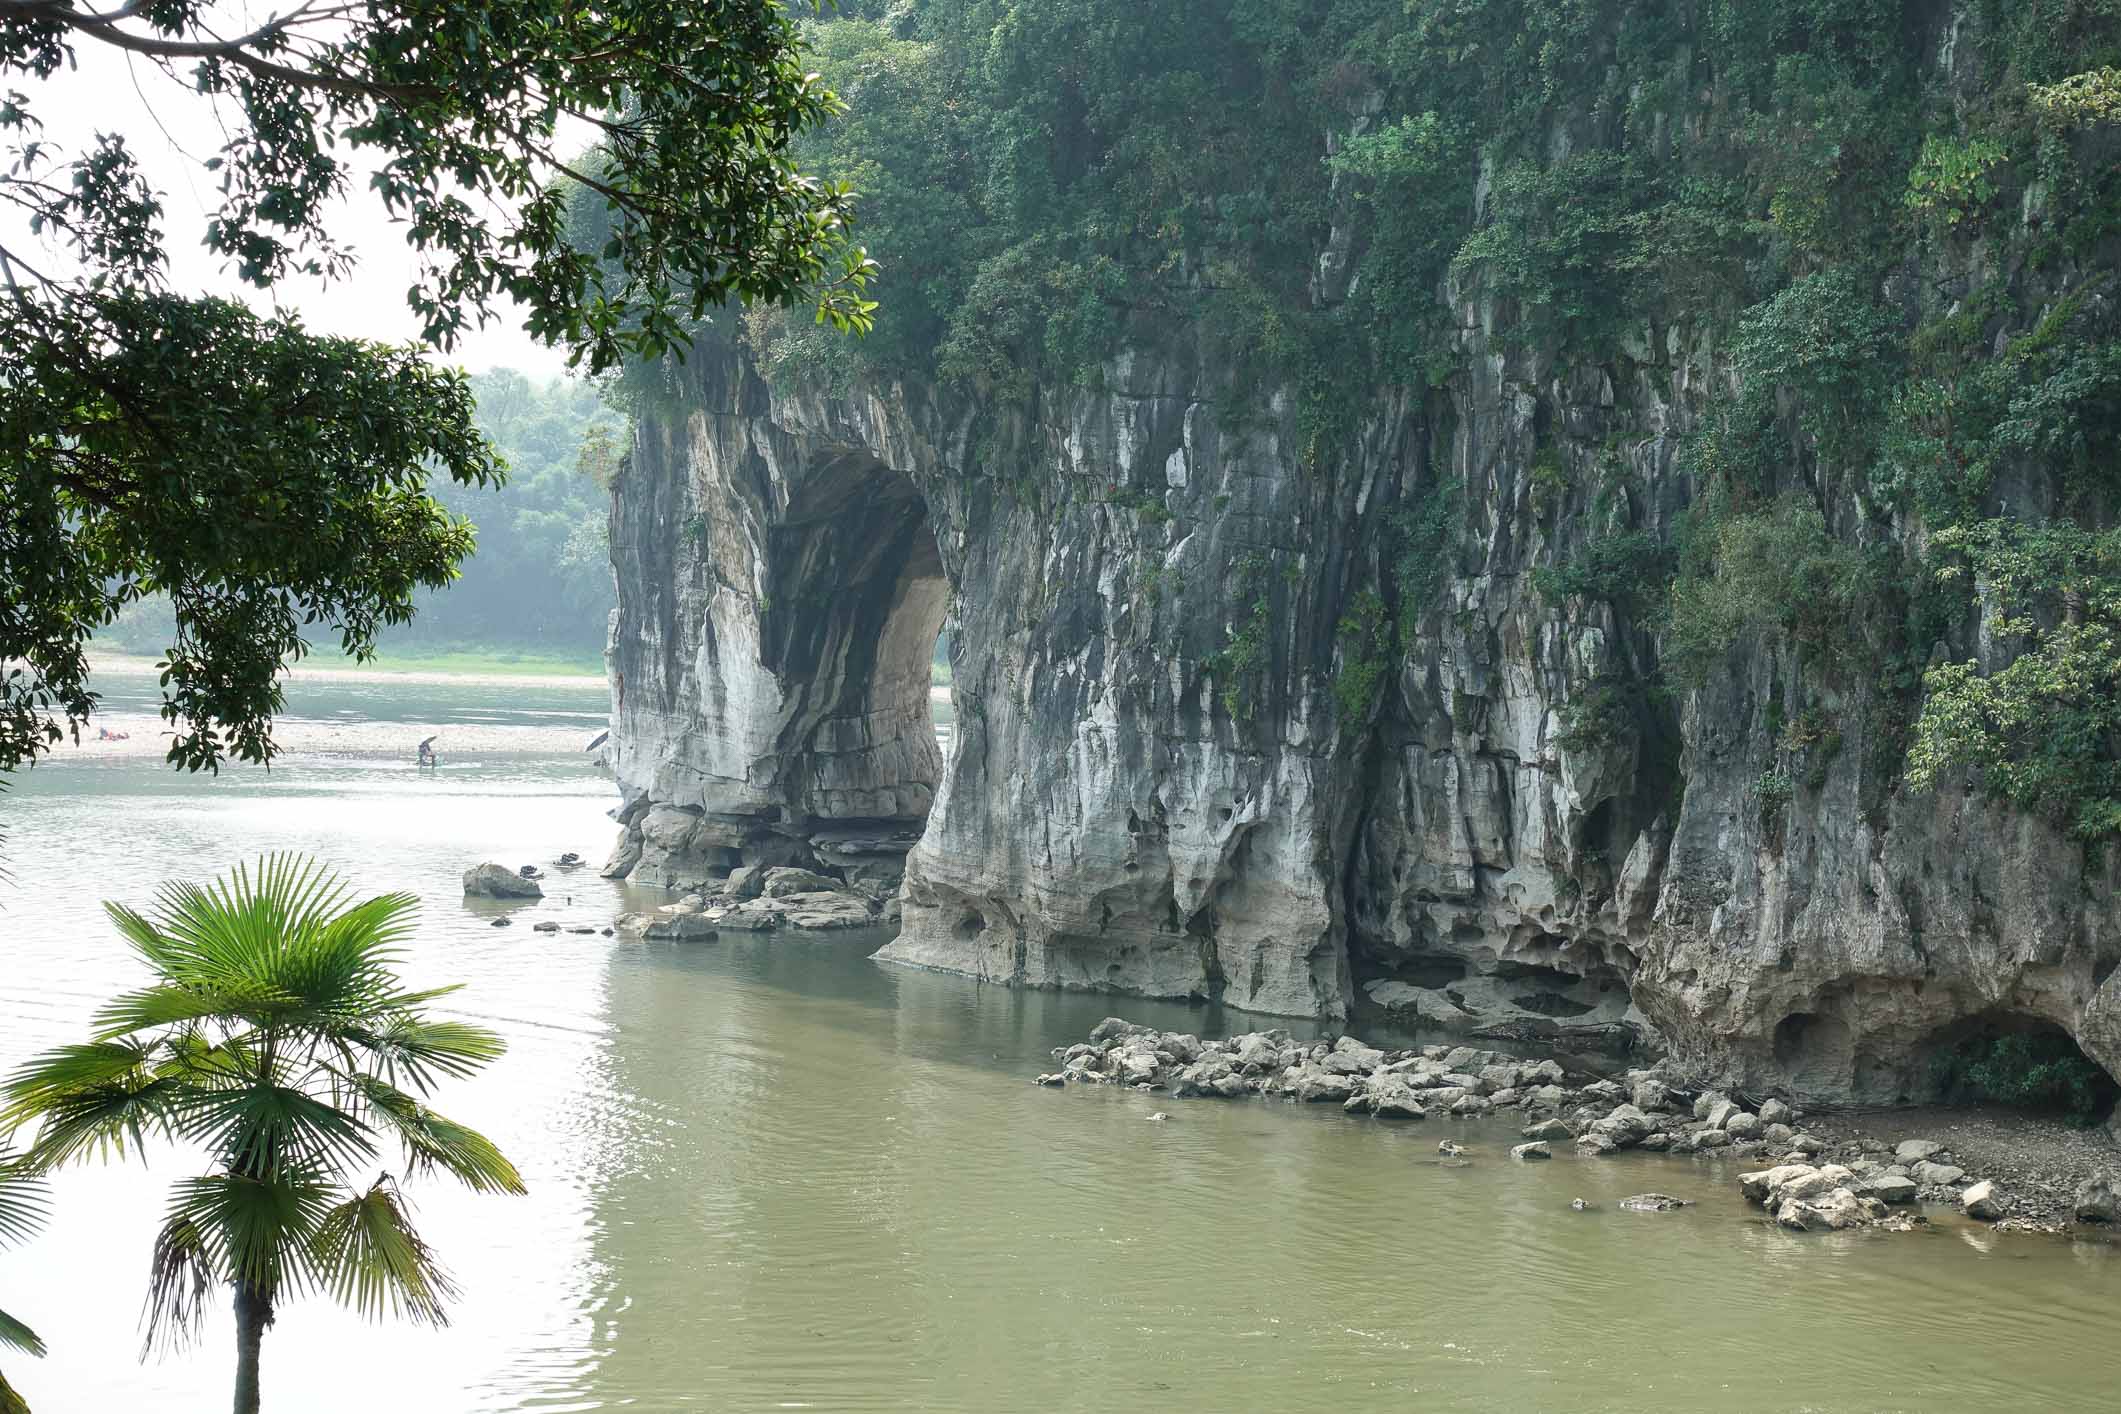 Elephant trunk rock formation in Guilin